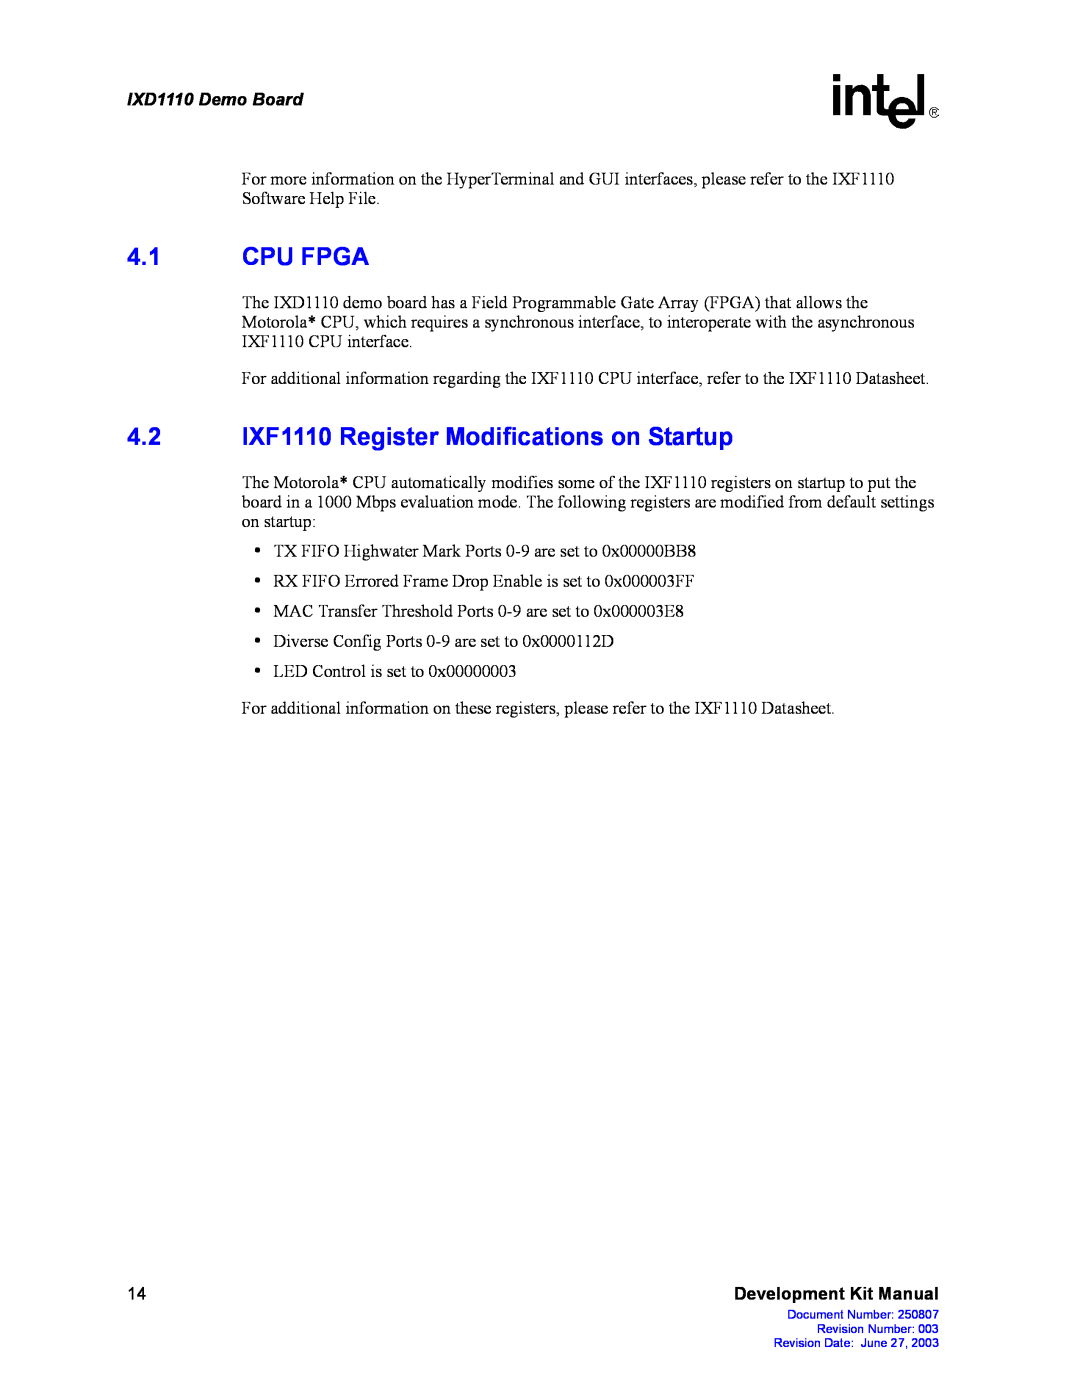 Intel manual Cpu Fpga, 4.2 IXF1110 Register Modifications on Startup, IXD1110 Demo Board 